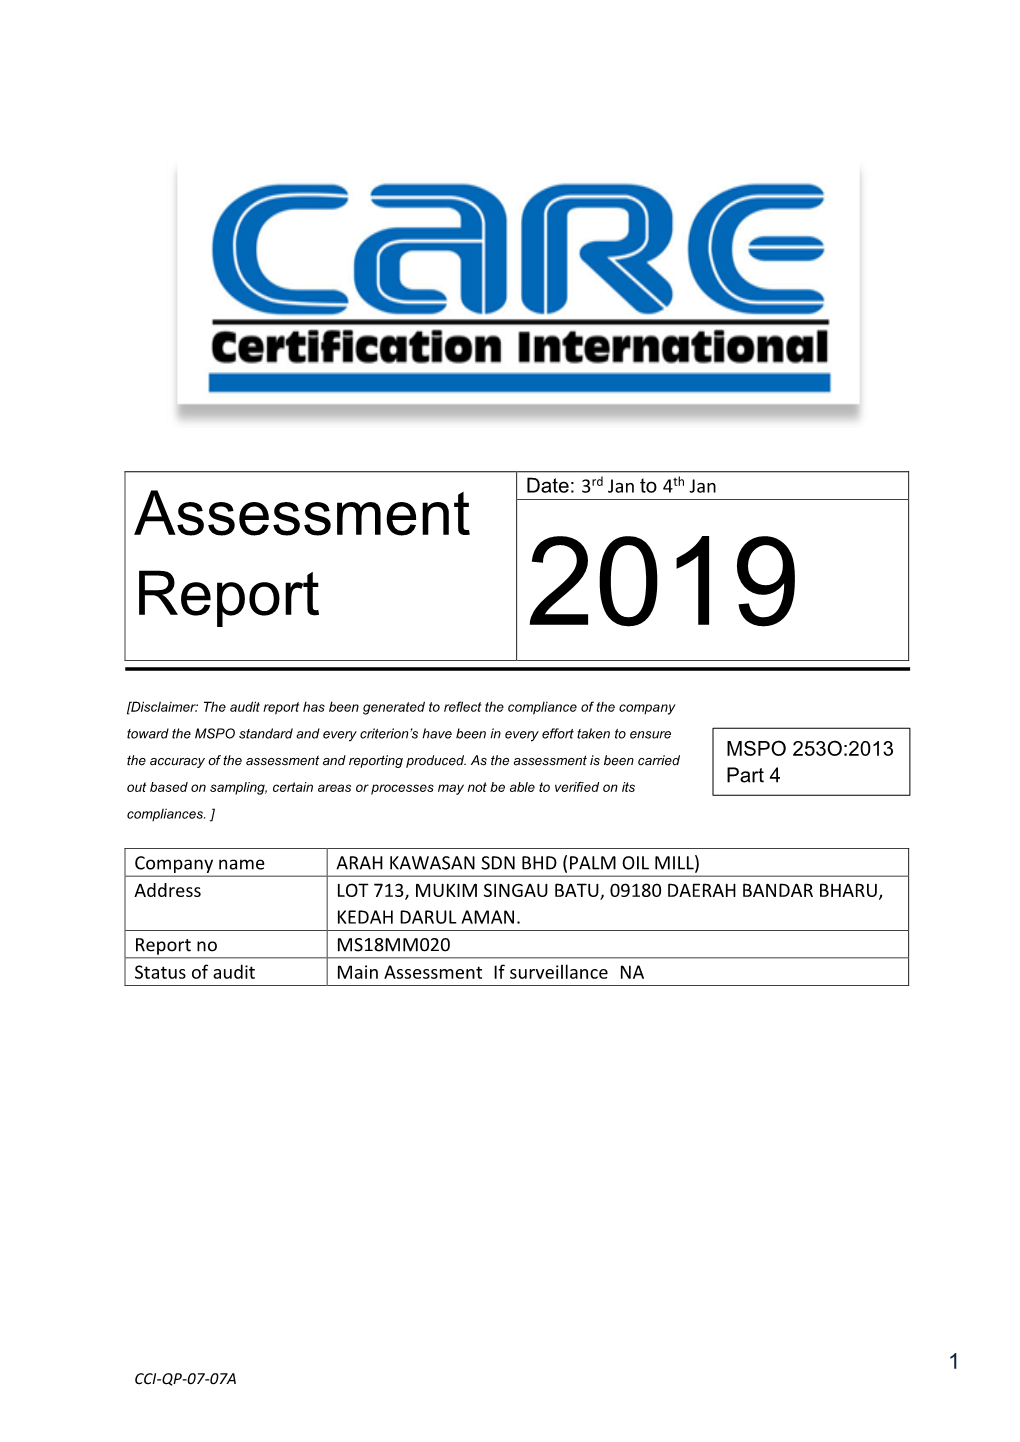 Assessment Report 2019